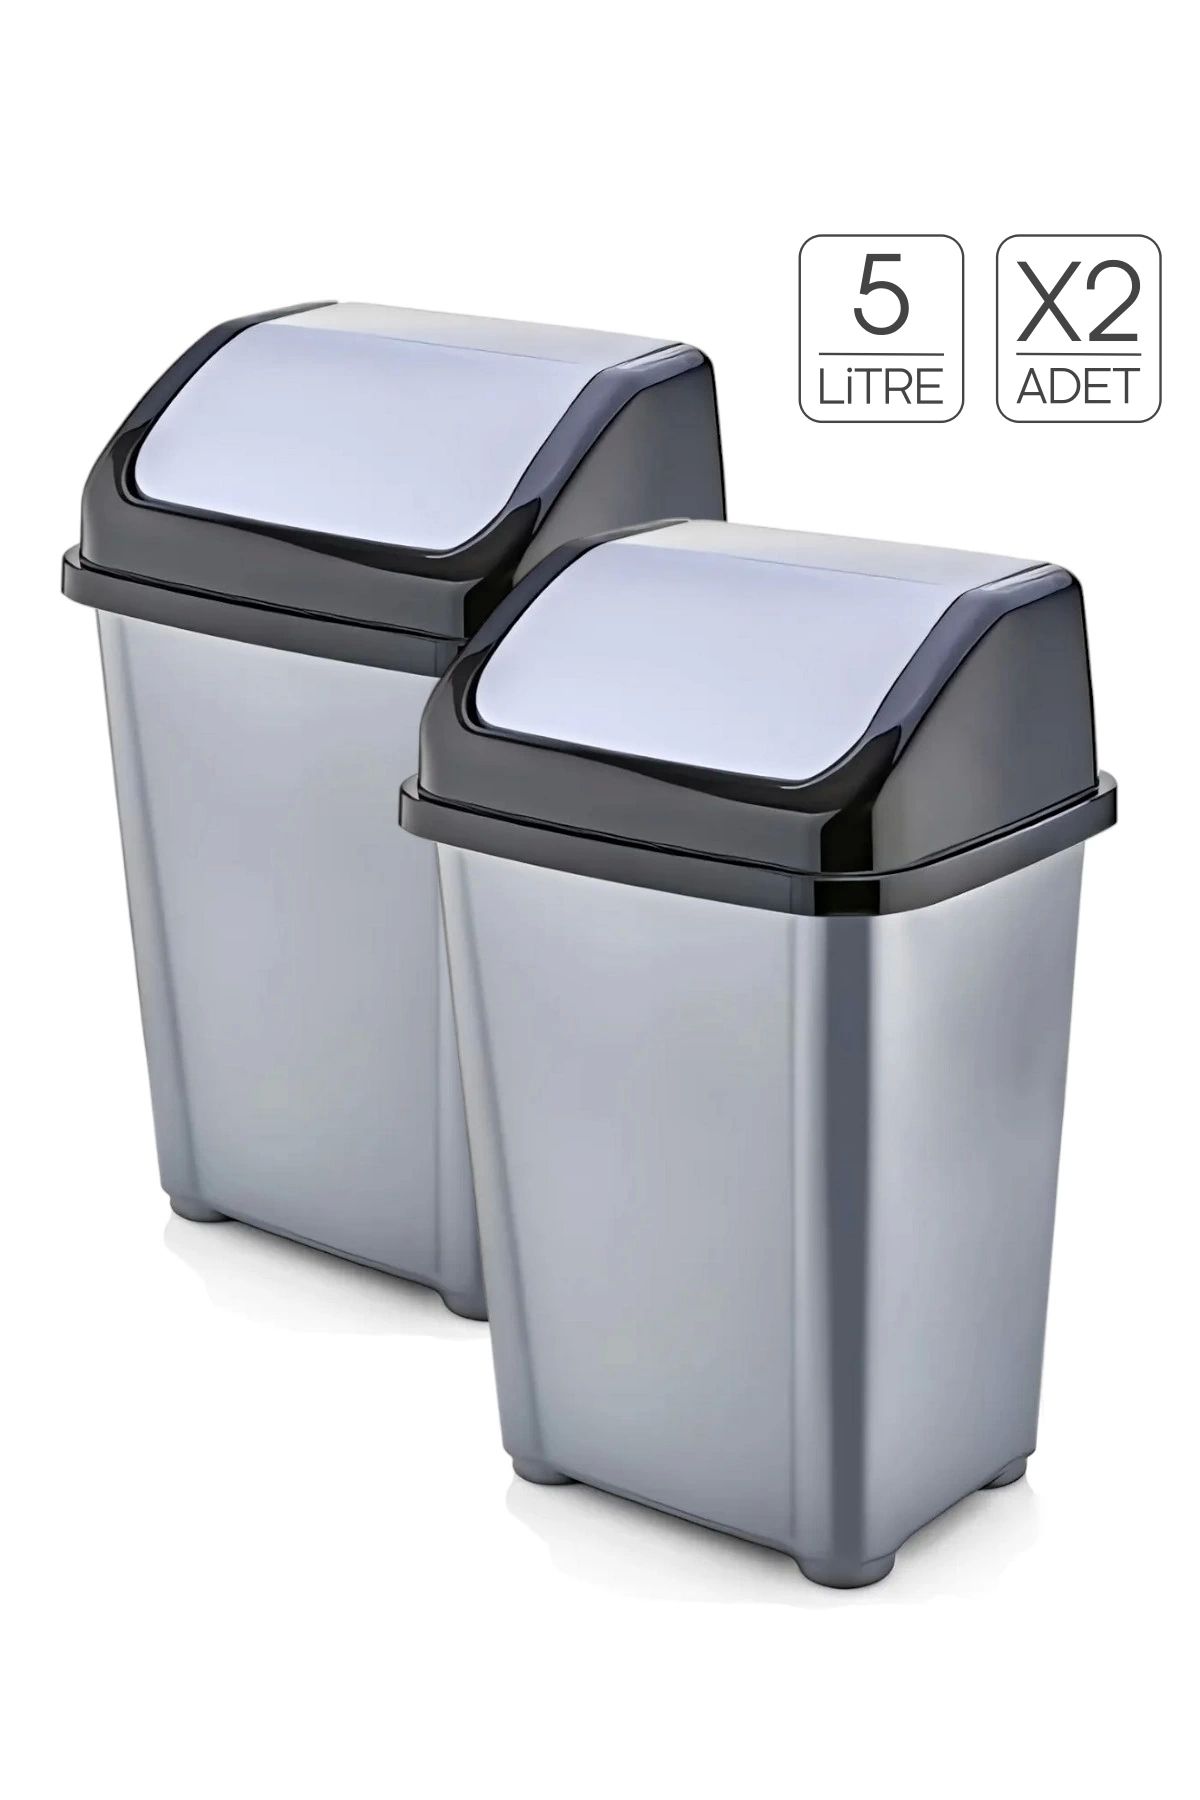 Tilbe Home 2 Adet Klik Kapaklı Çöp Kovası İnox Mutfak Banyo Pratik Kapaklı Küçük Çöp Kovası 5 Litre Seti